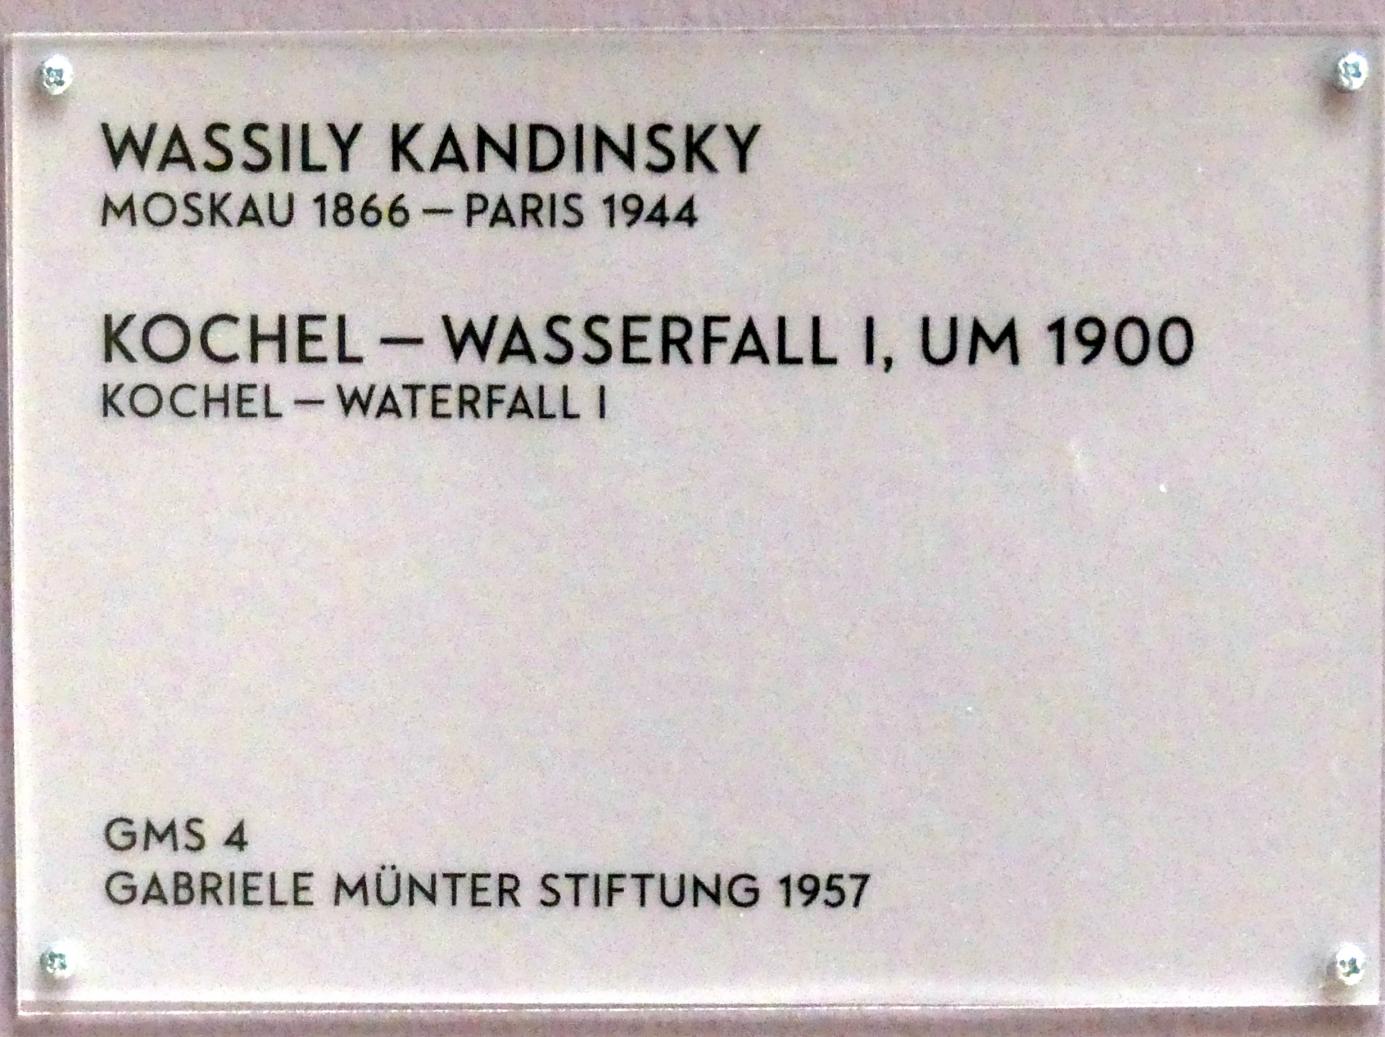 Wassily Kandinsky (1900–1943), Kochel - Wasserfall I, München, Lenbachhaus, Saal 32, um 1900, Bild 2/2